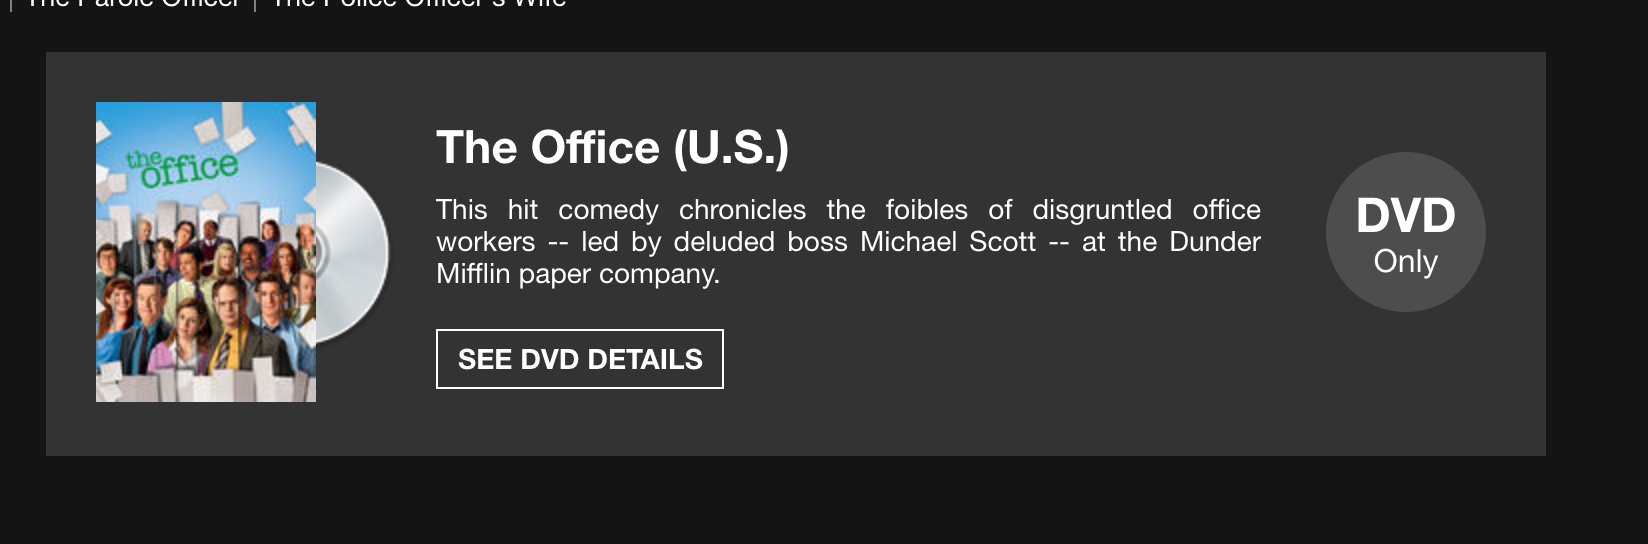 The Office DVD on Netflix